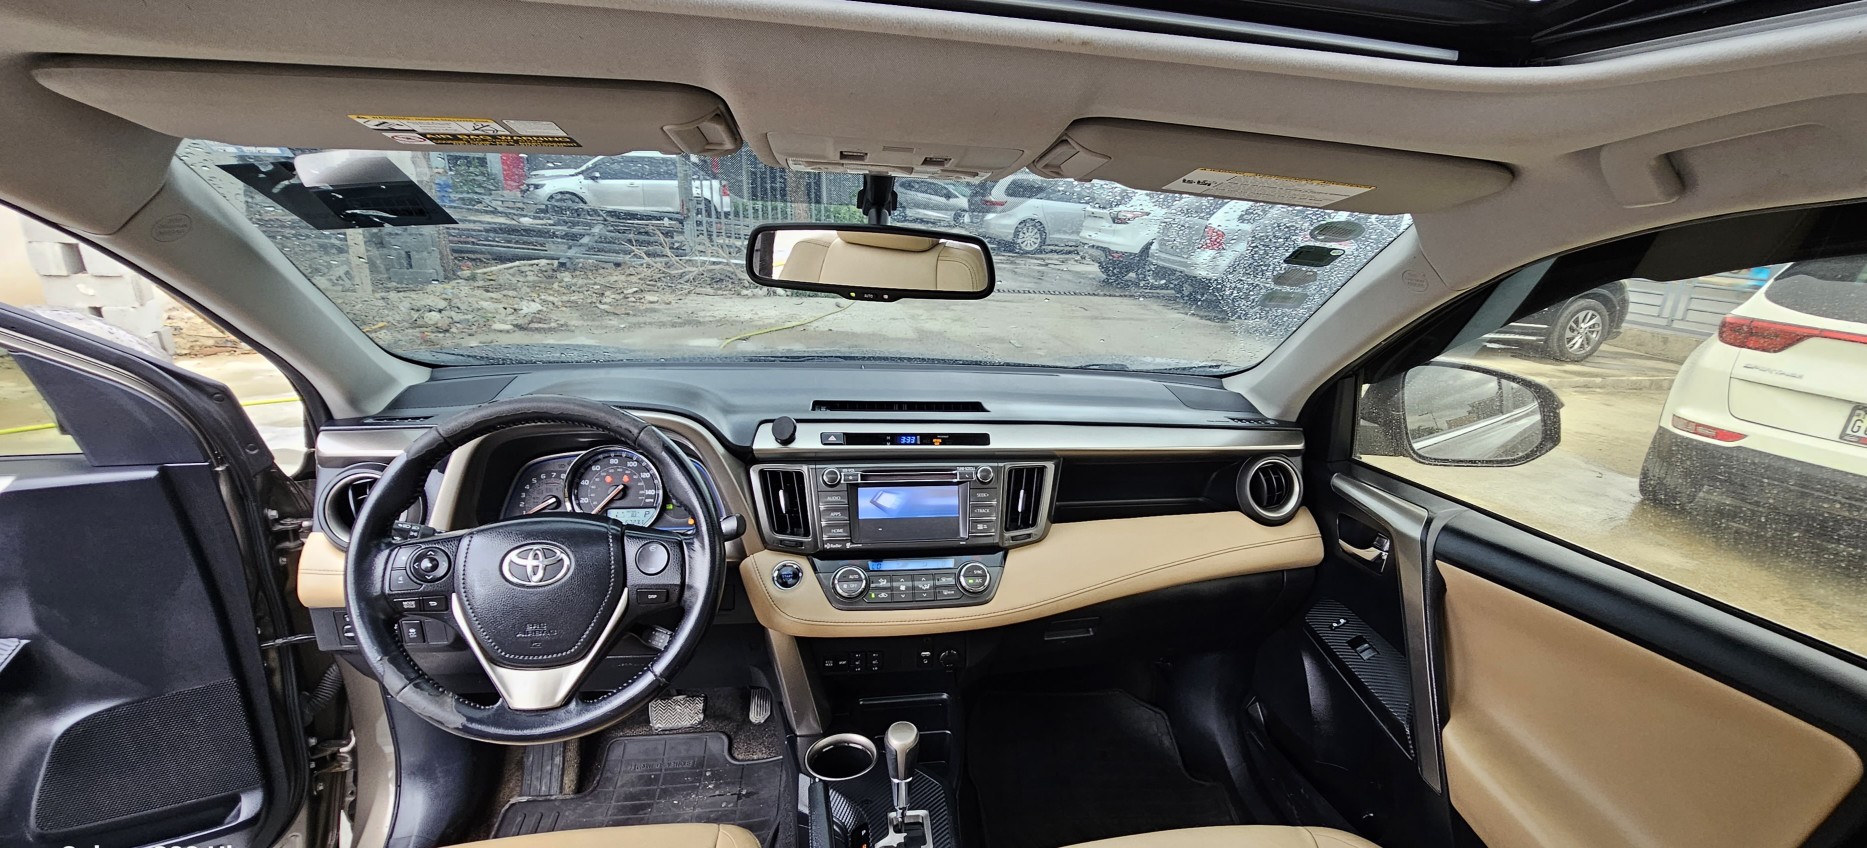 jeepetas y camionetas - Toyota Rav4 Limited 2015 4x4  8